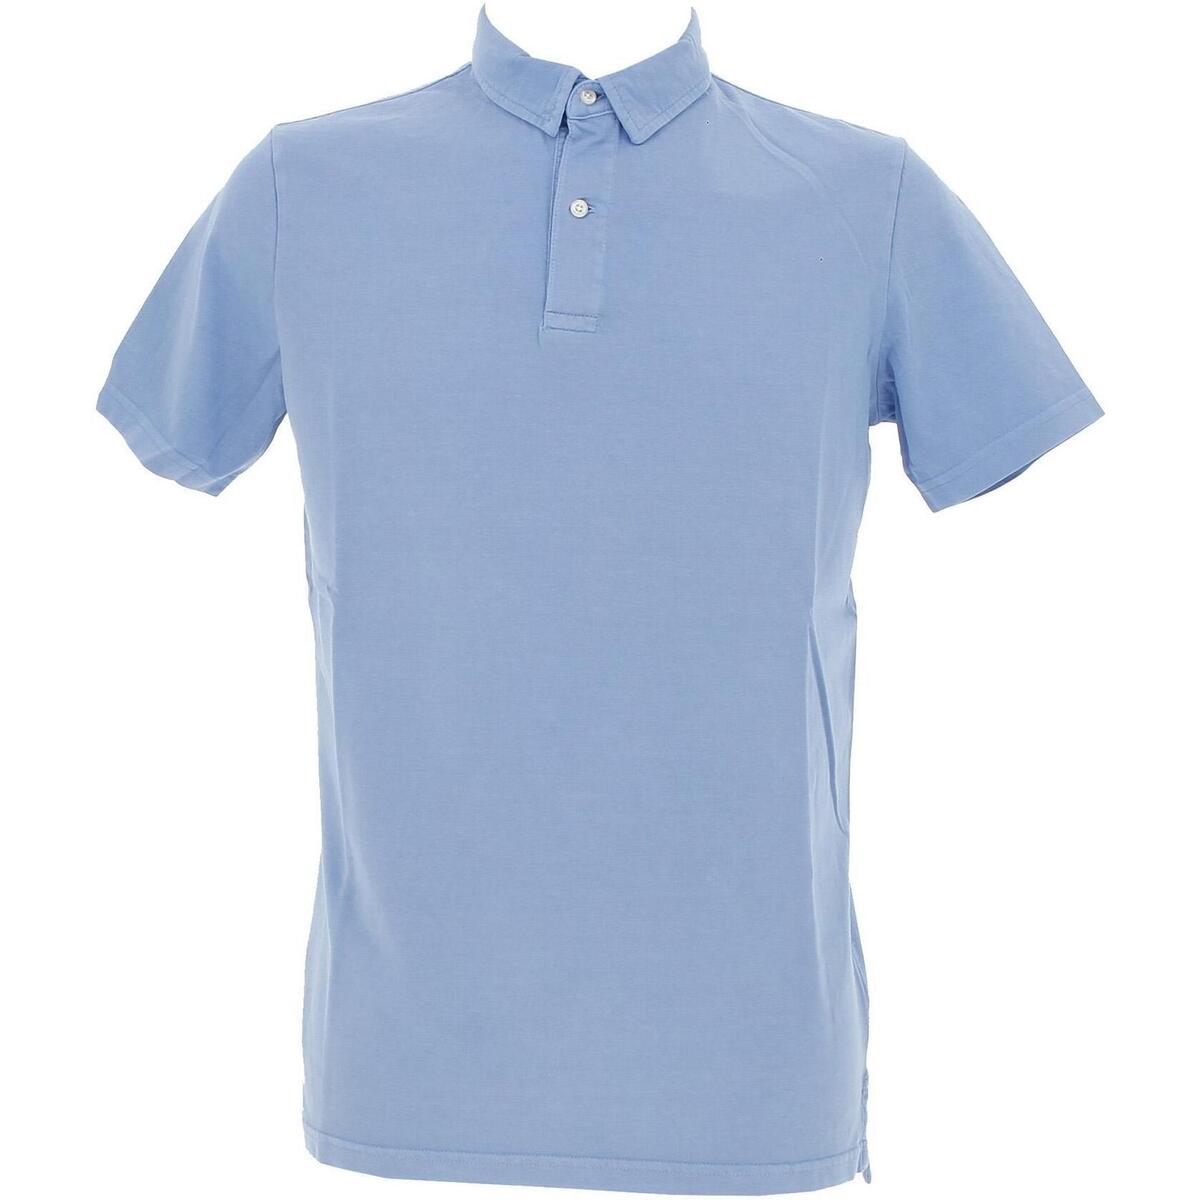 Vêtements Homme Polos manches courtes Superdry Polo jersey mc bleu jacinthe Bleu